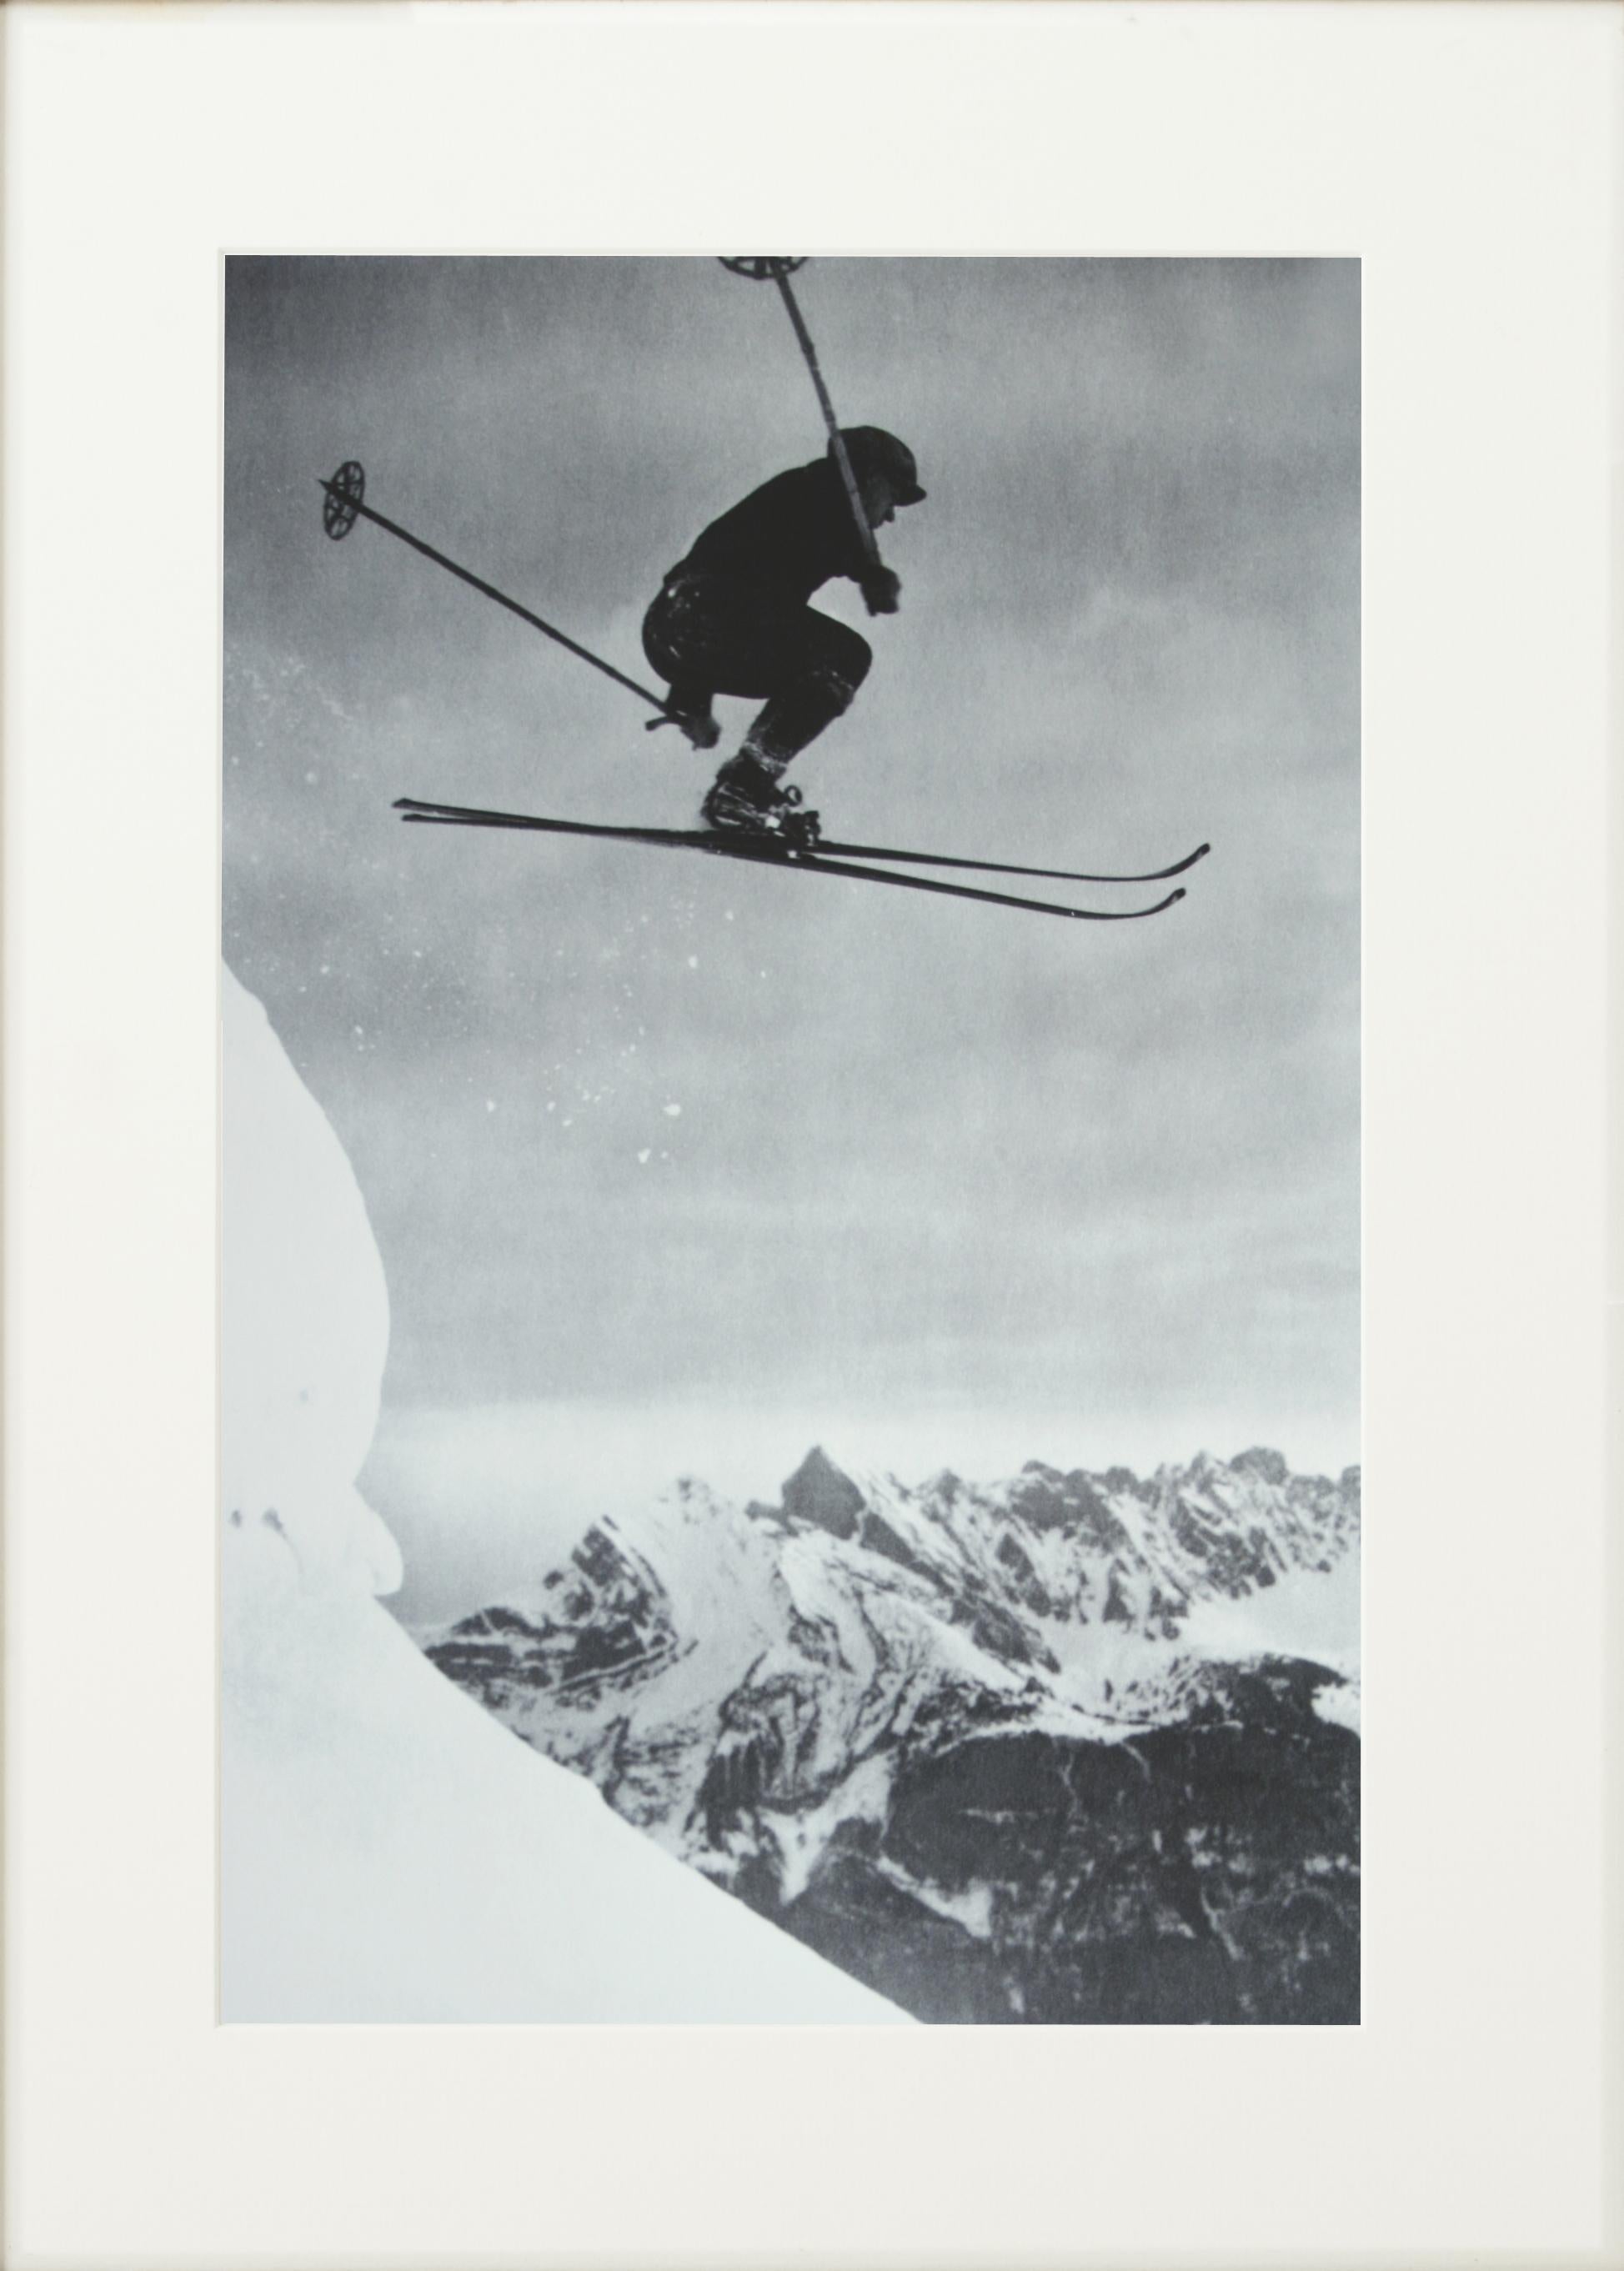 Sporting Art Photographie de ski alpin ancienne vintage, Der Sprung en vente